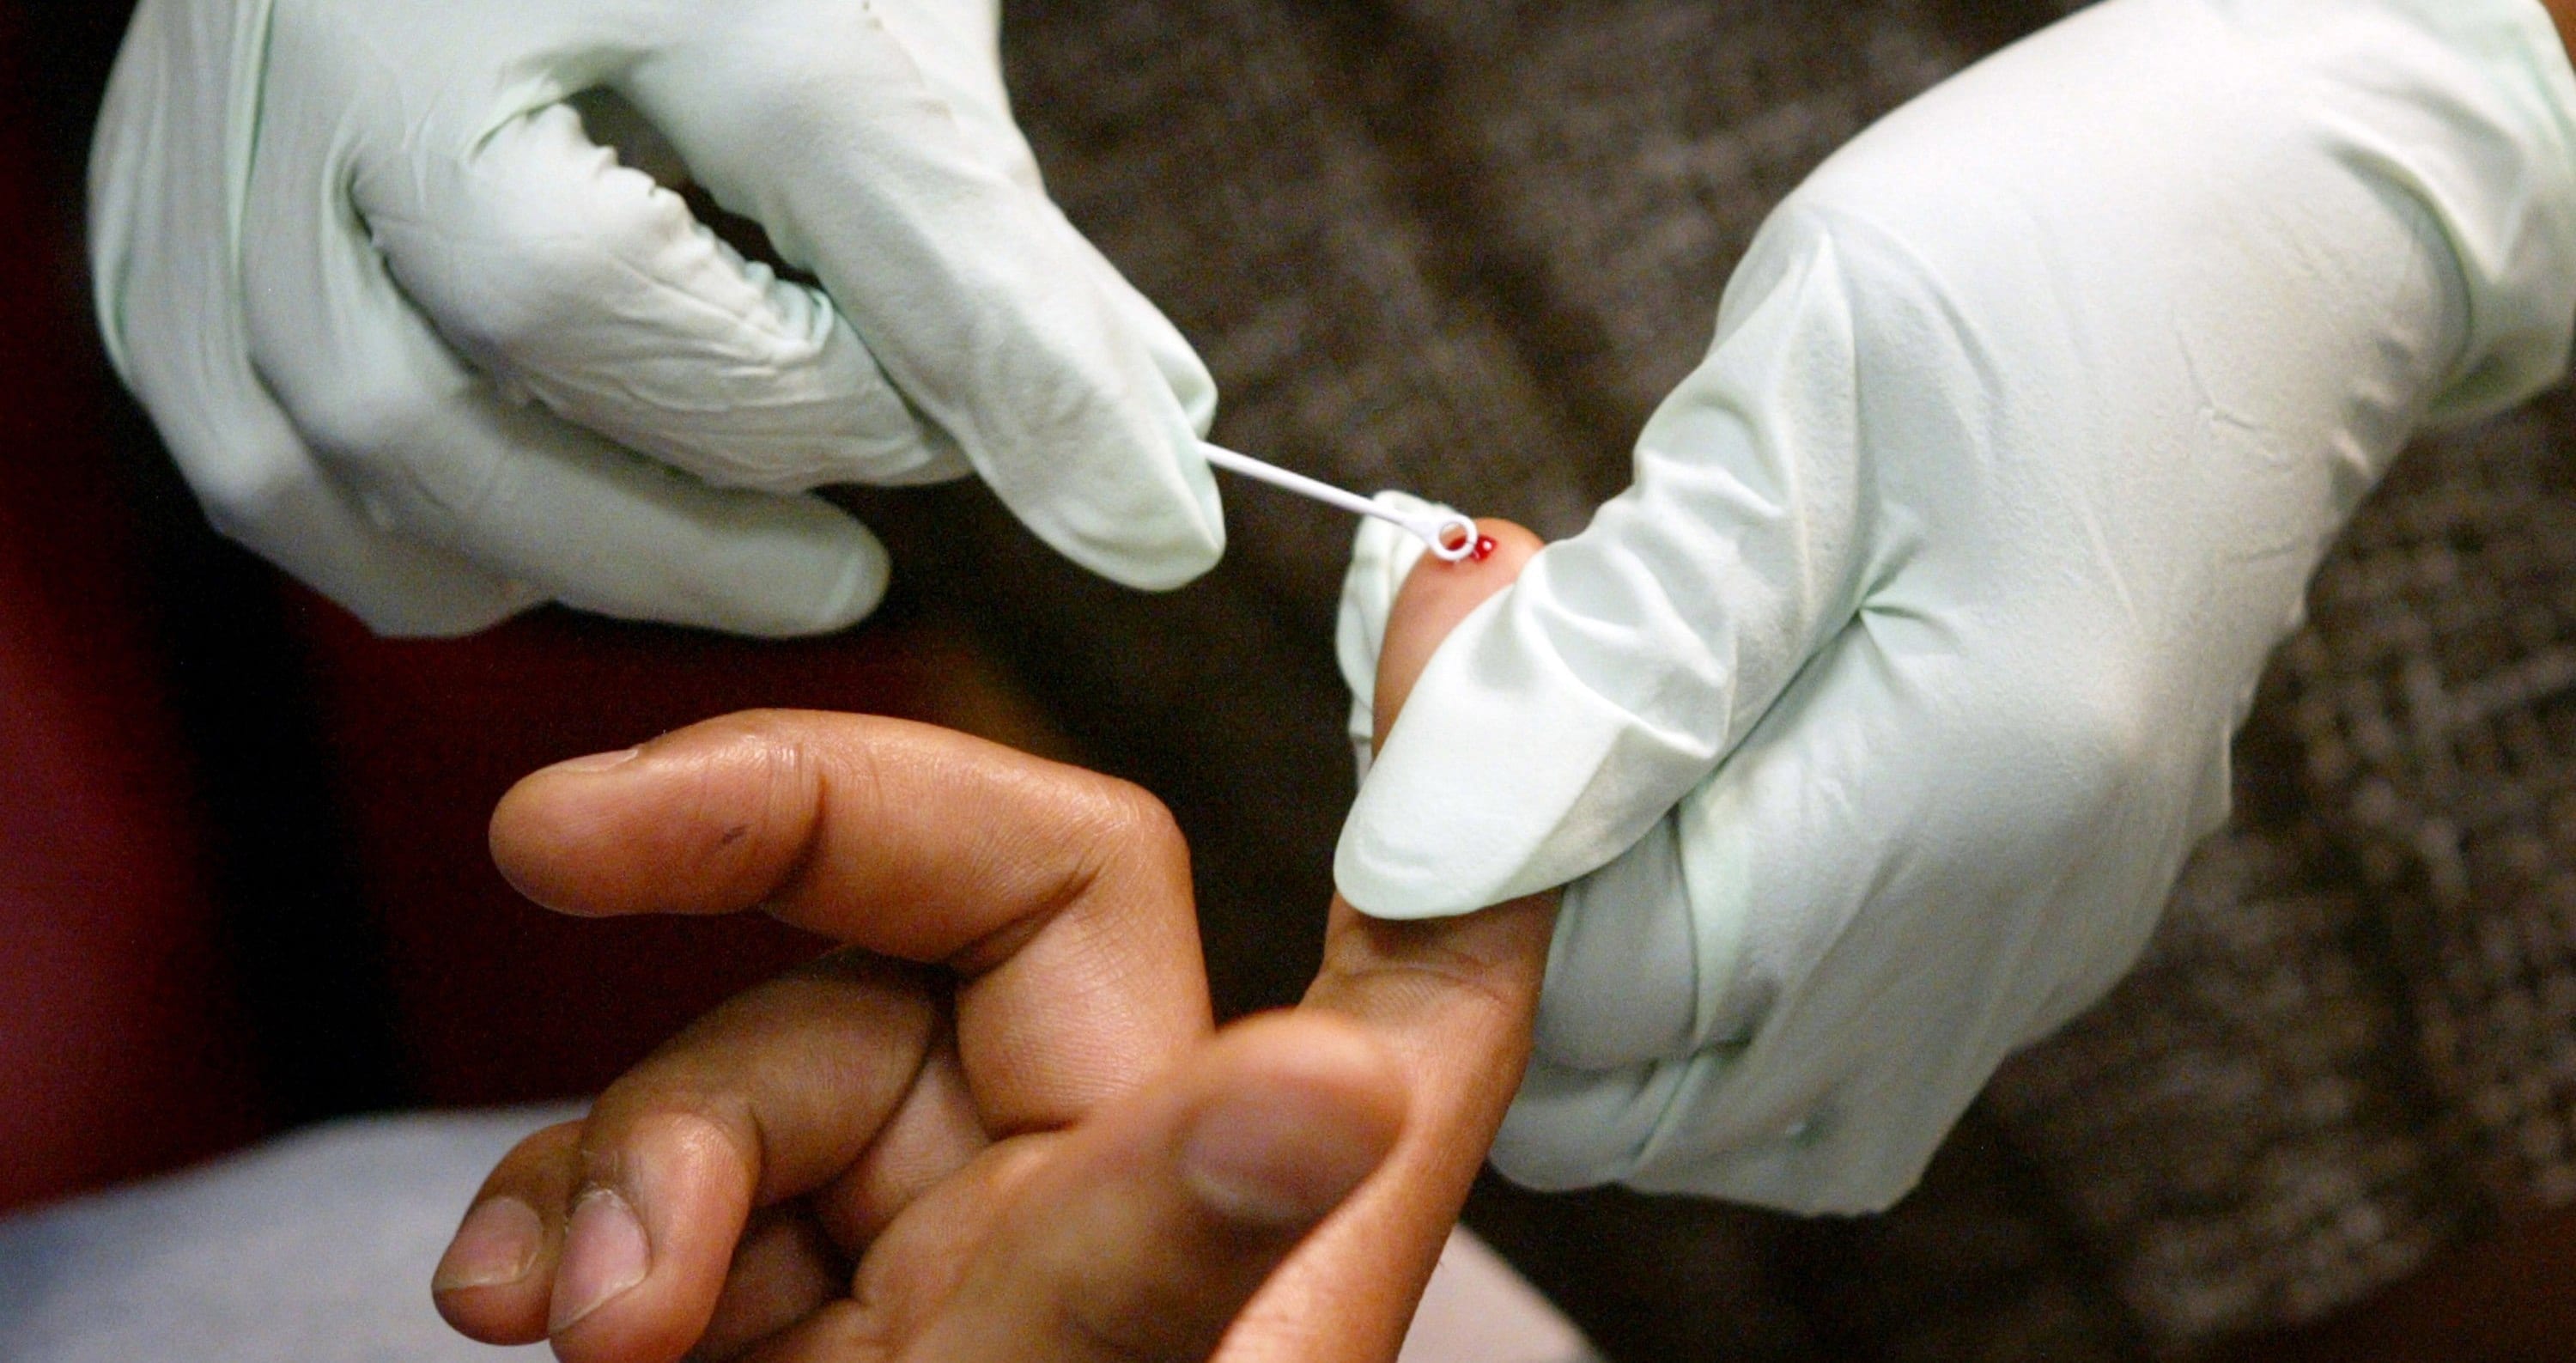 Free HIV testing in Limerick as virus on increase